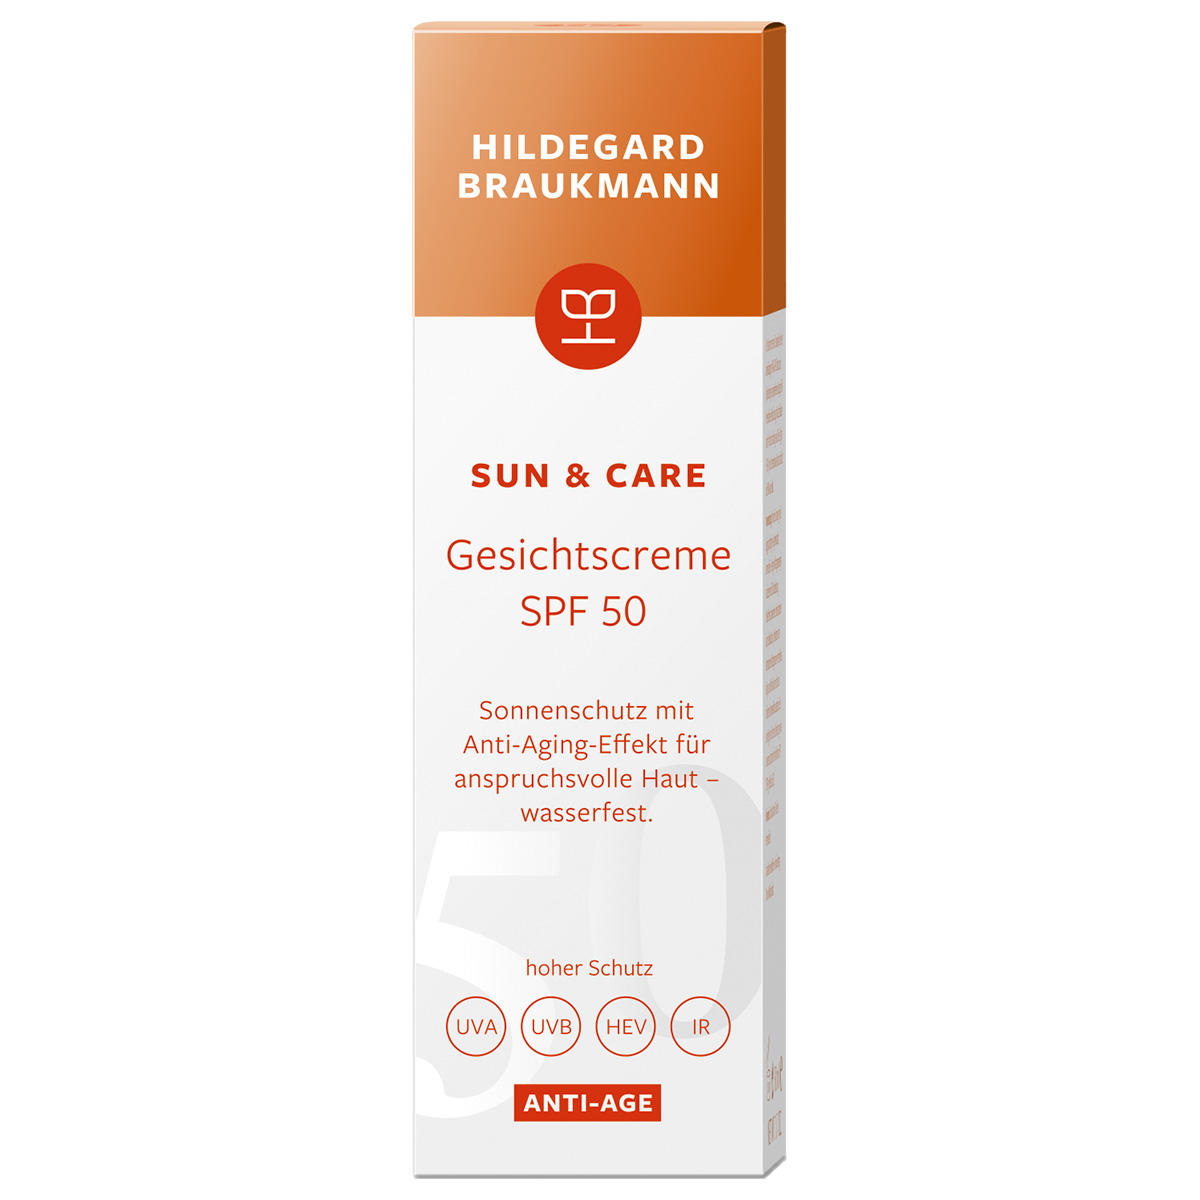 Hildegard Braukmann sun & care Anti-Age Gezichtscrème SPF 50 50 ml - 2